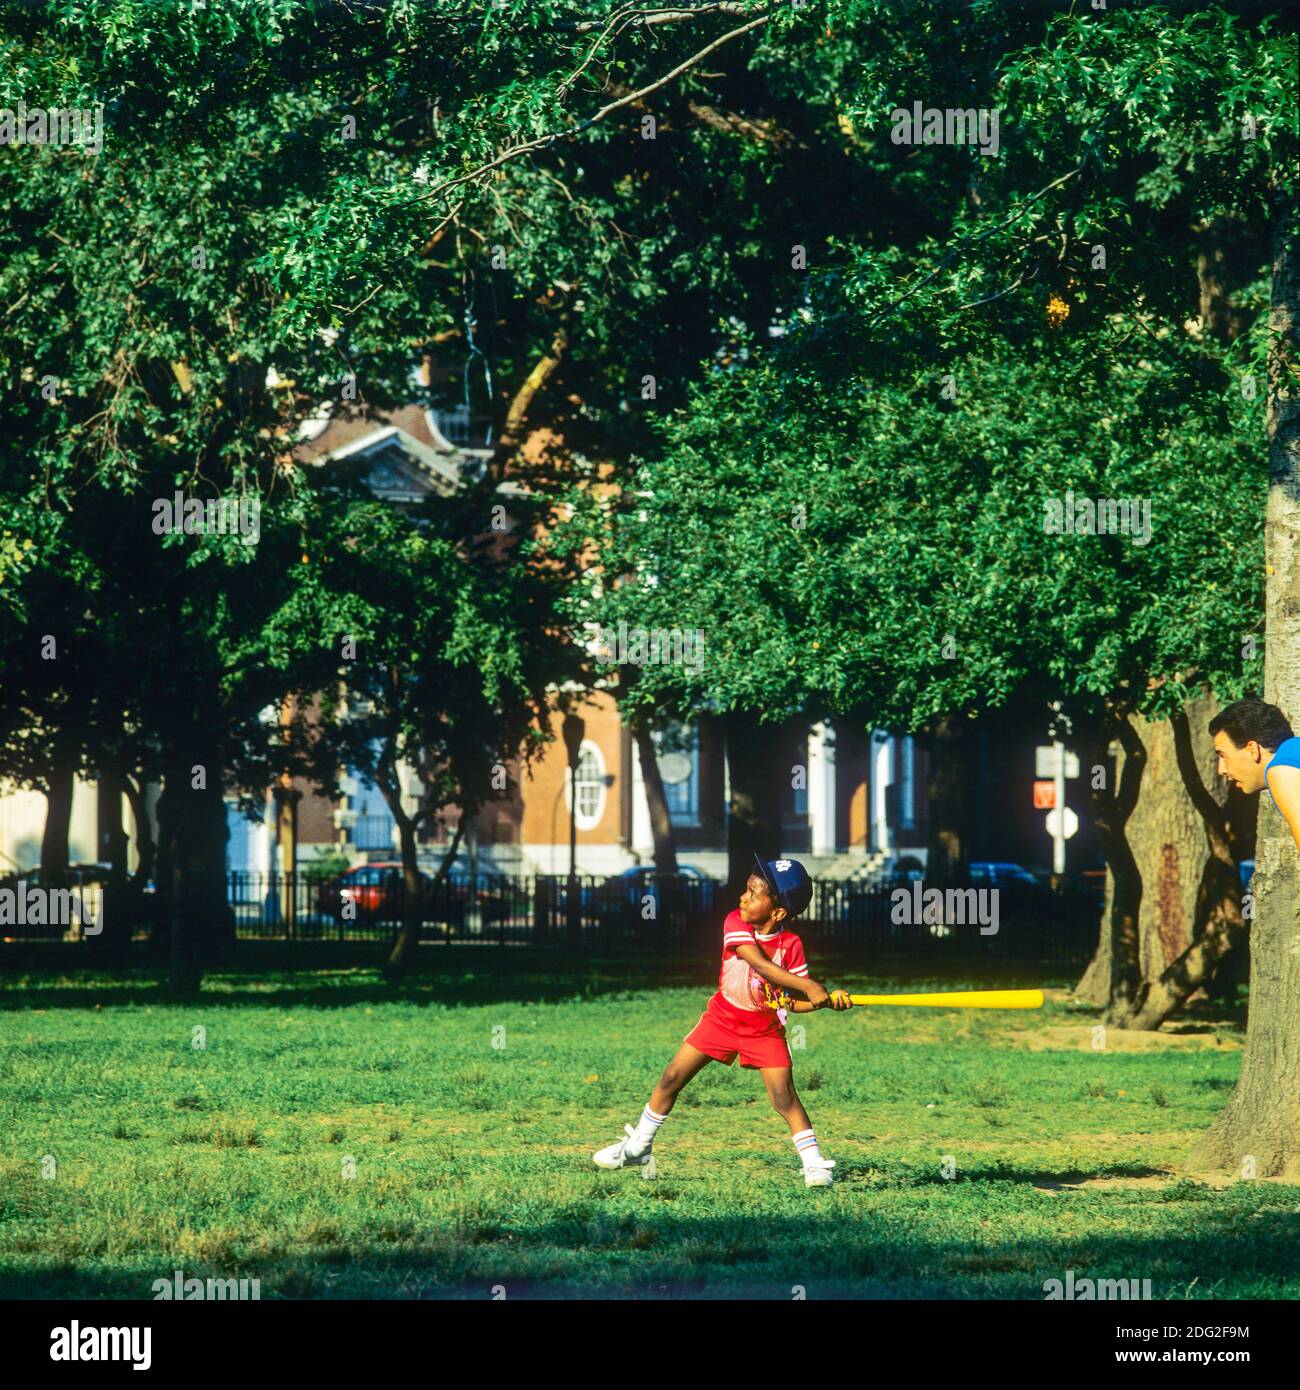 New York 1985, kleiner afroamerikanischer Junge, der Baseball spielt, schwingender Baseballschläger, Battery Park, Lower Manhattan, New York City, NY, NYC, USA, Stockfoto